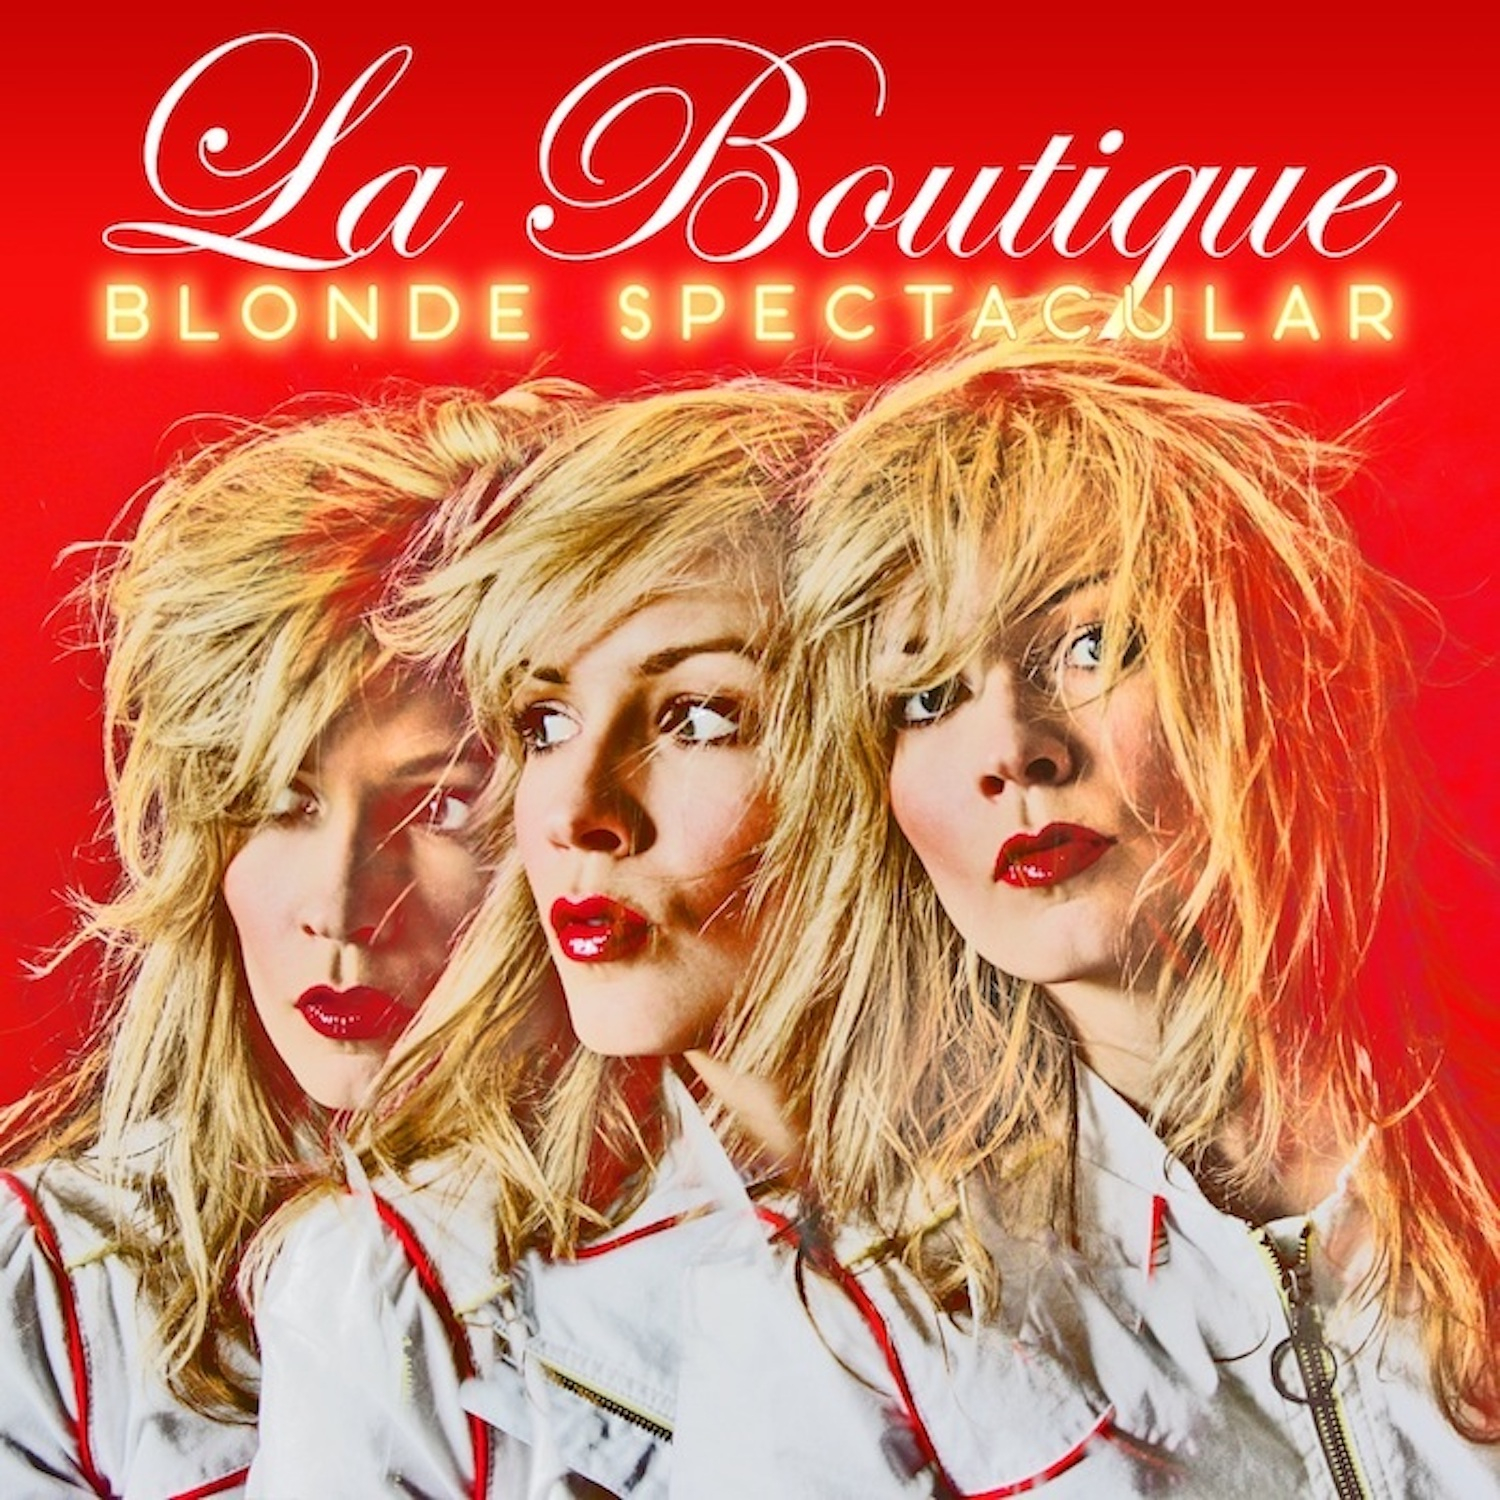 Blonde альбом. Blondie альбомы. Blondine песни. The blondes песни.